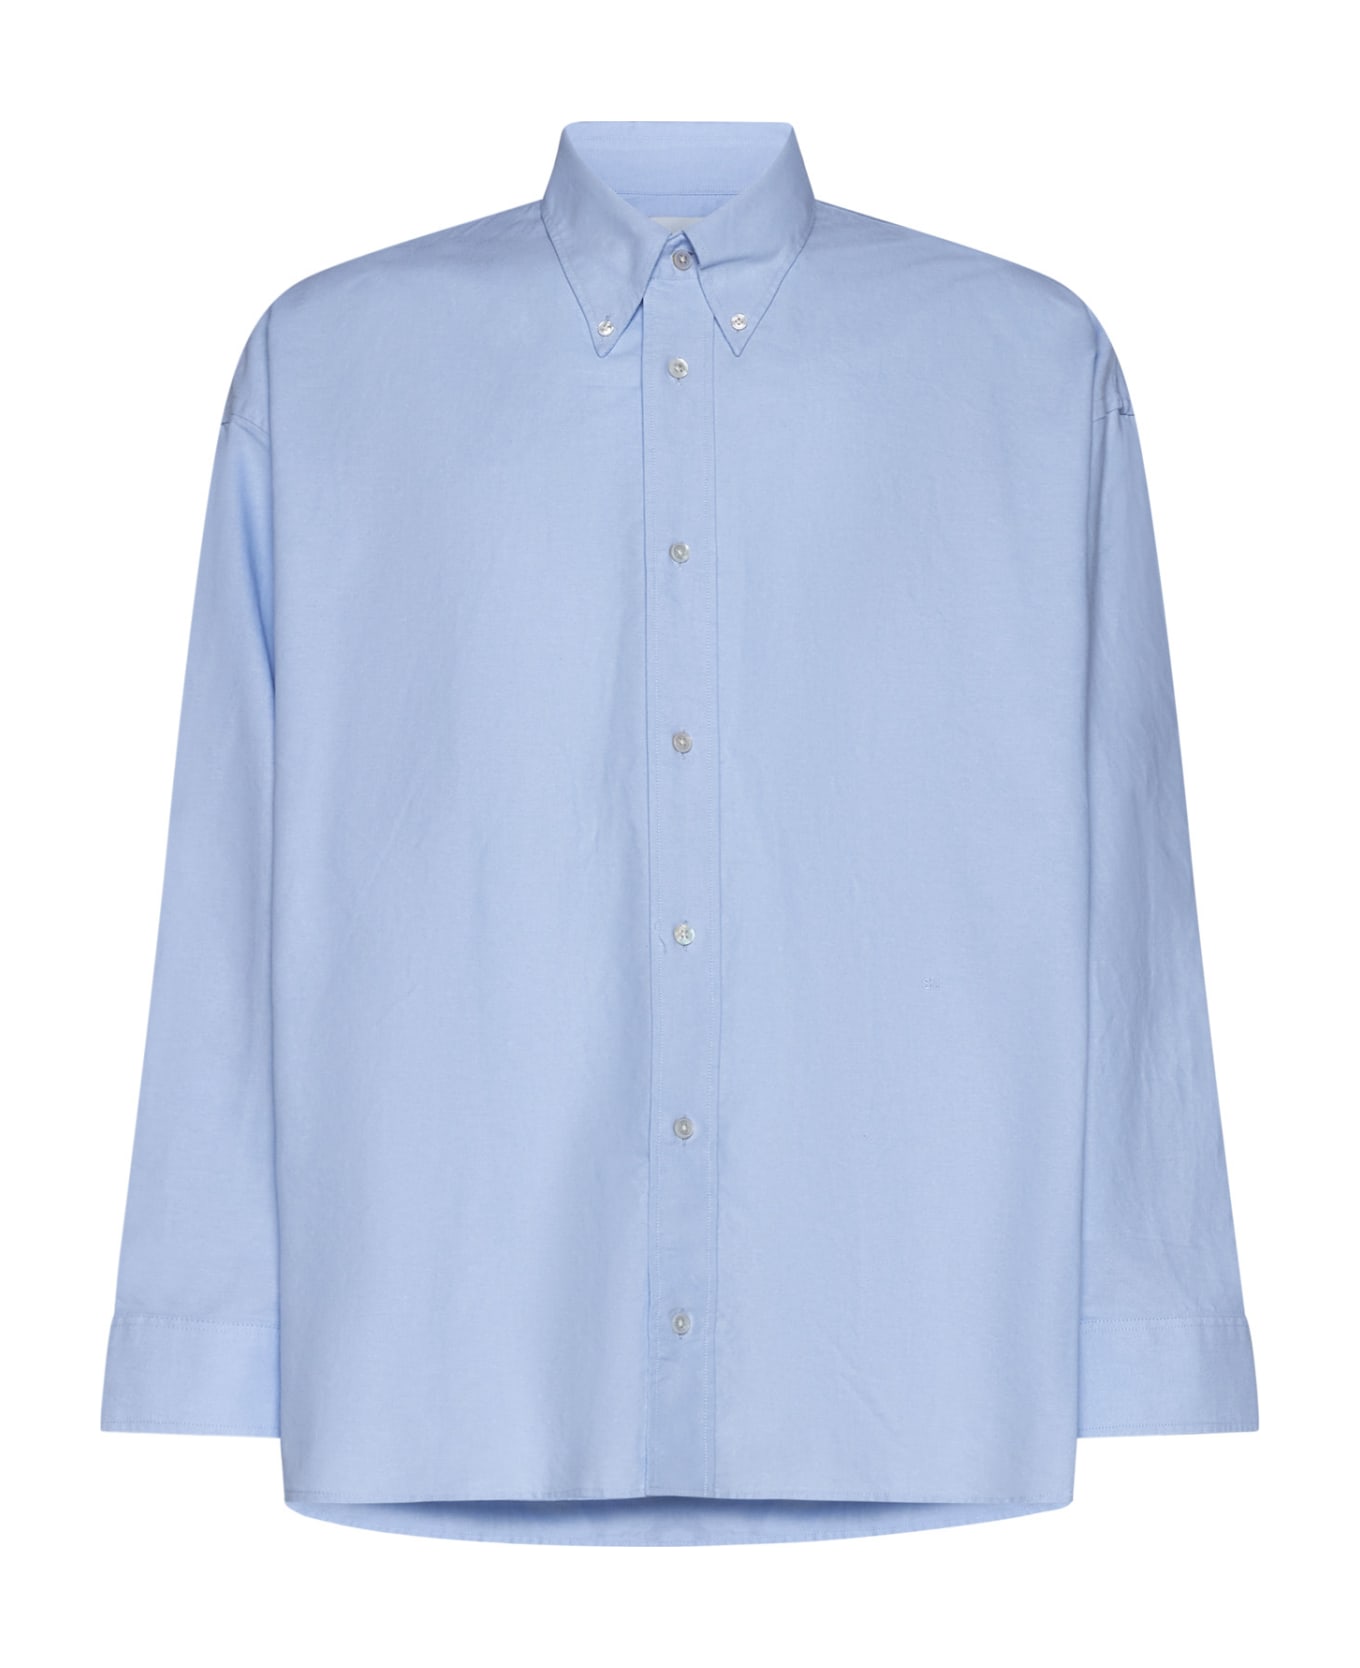 Studio Nicholson Shirt - Oxford blue シャツ